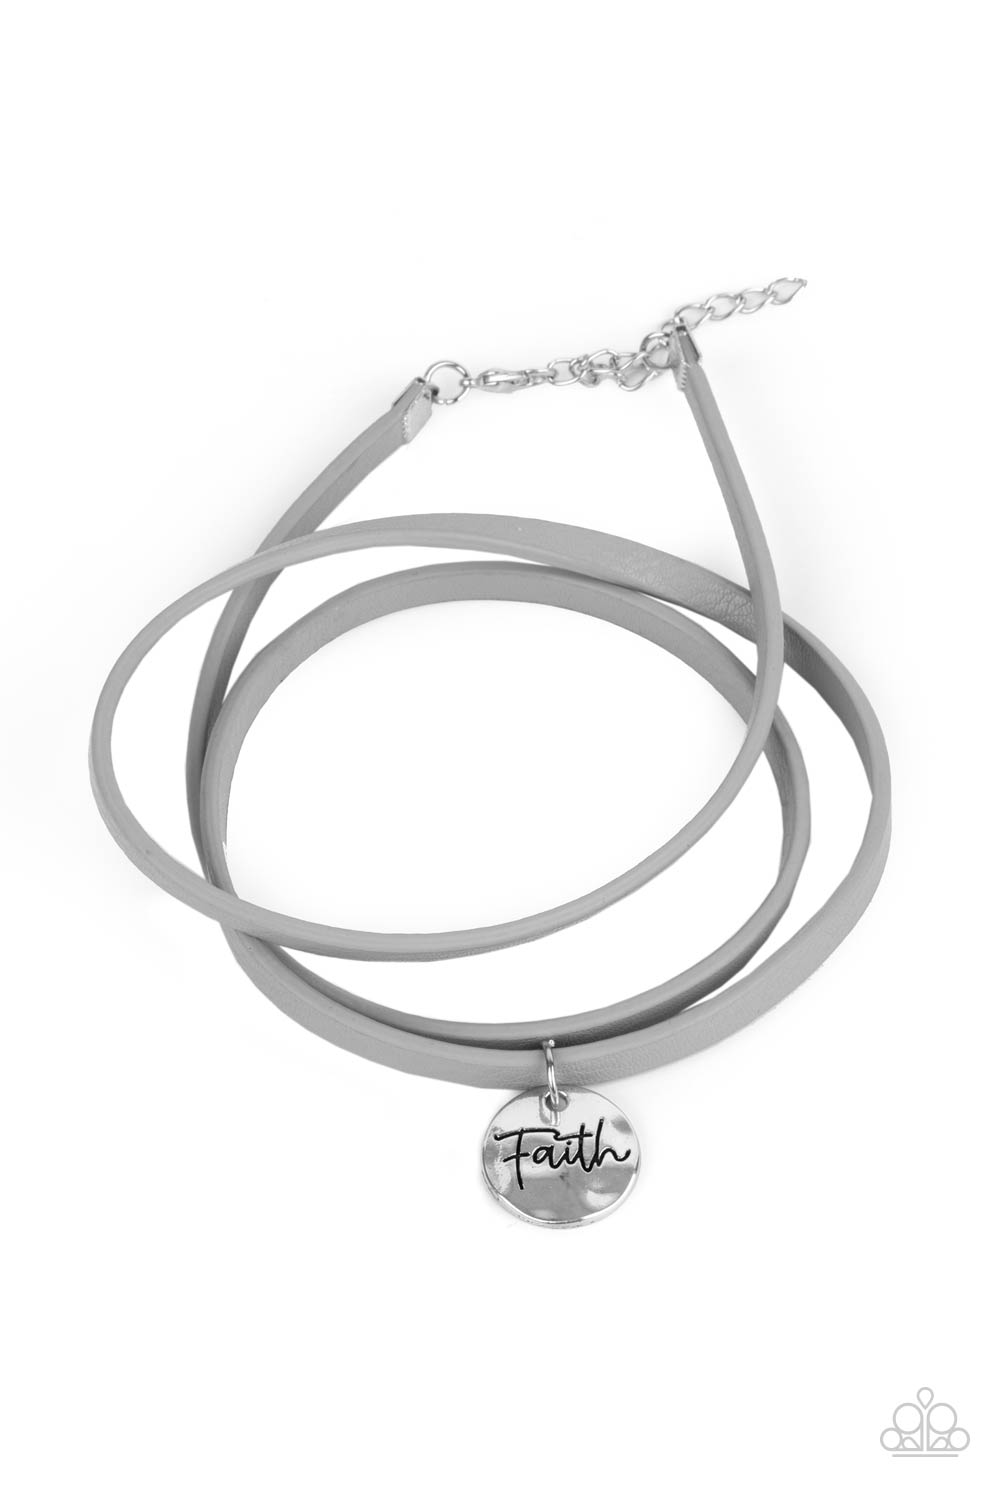 Wonderfully Worded - Silver Bracelet freeshipping - JewLz4u Gemstone Gallery